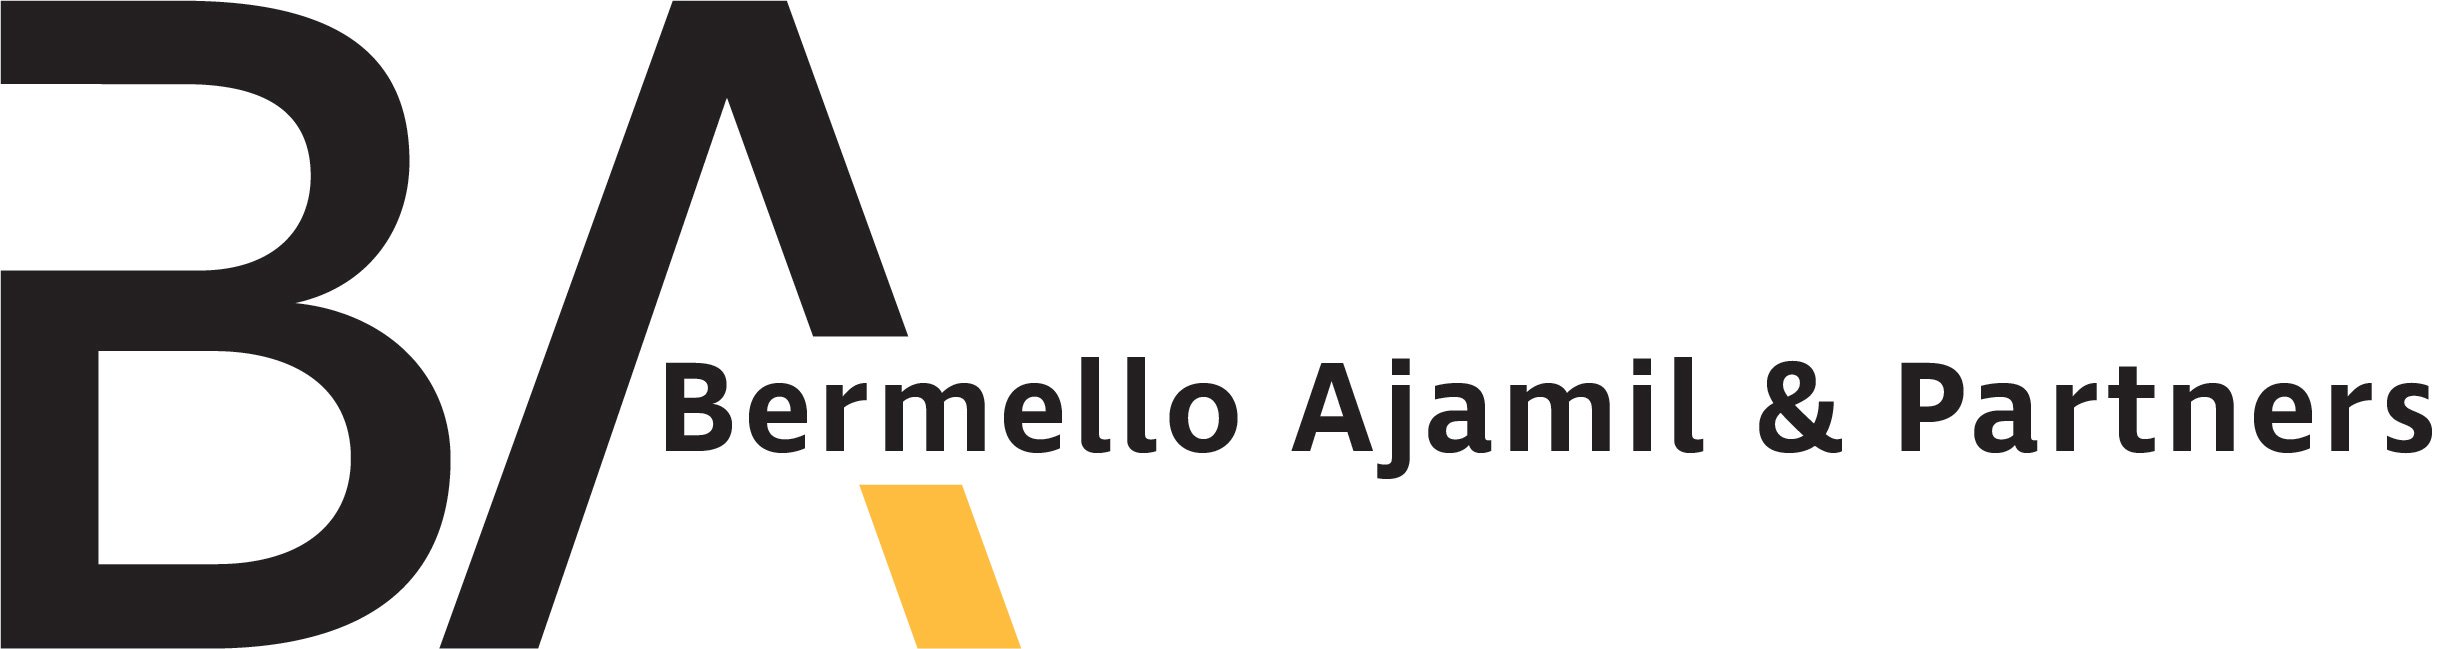 Bermello Ajamil & Partners